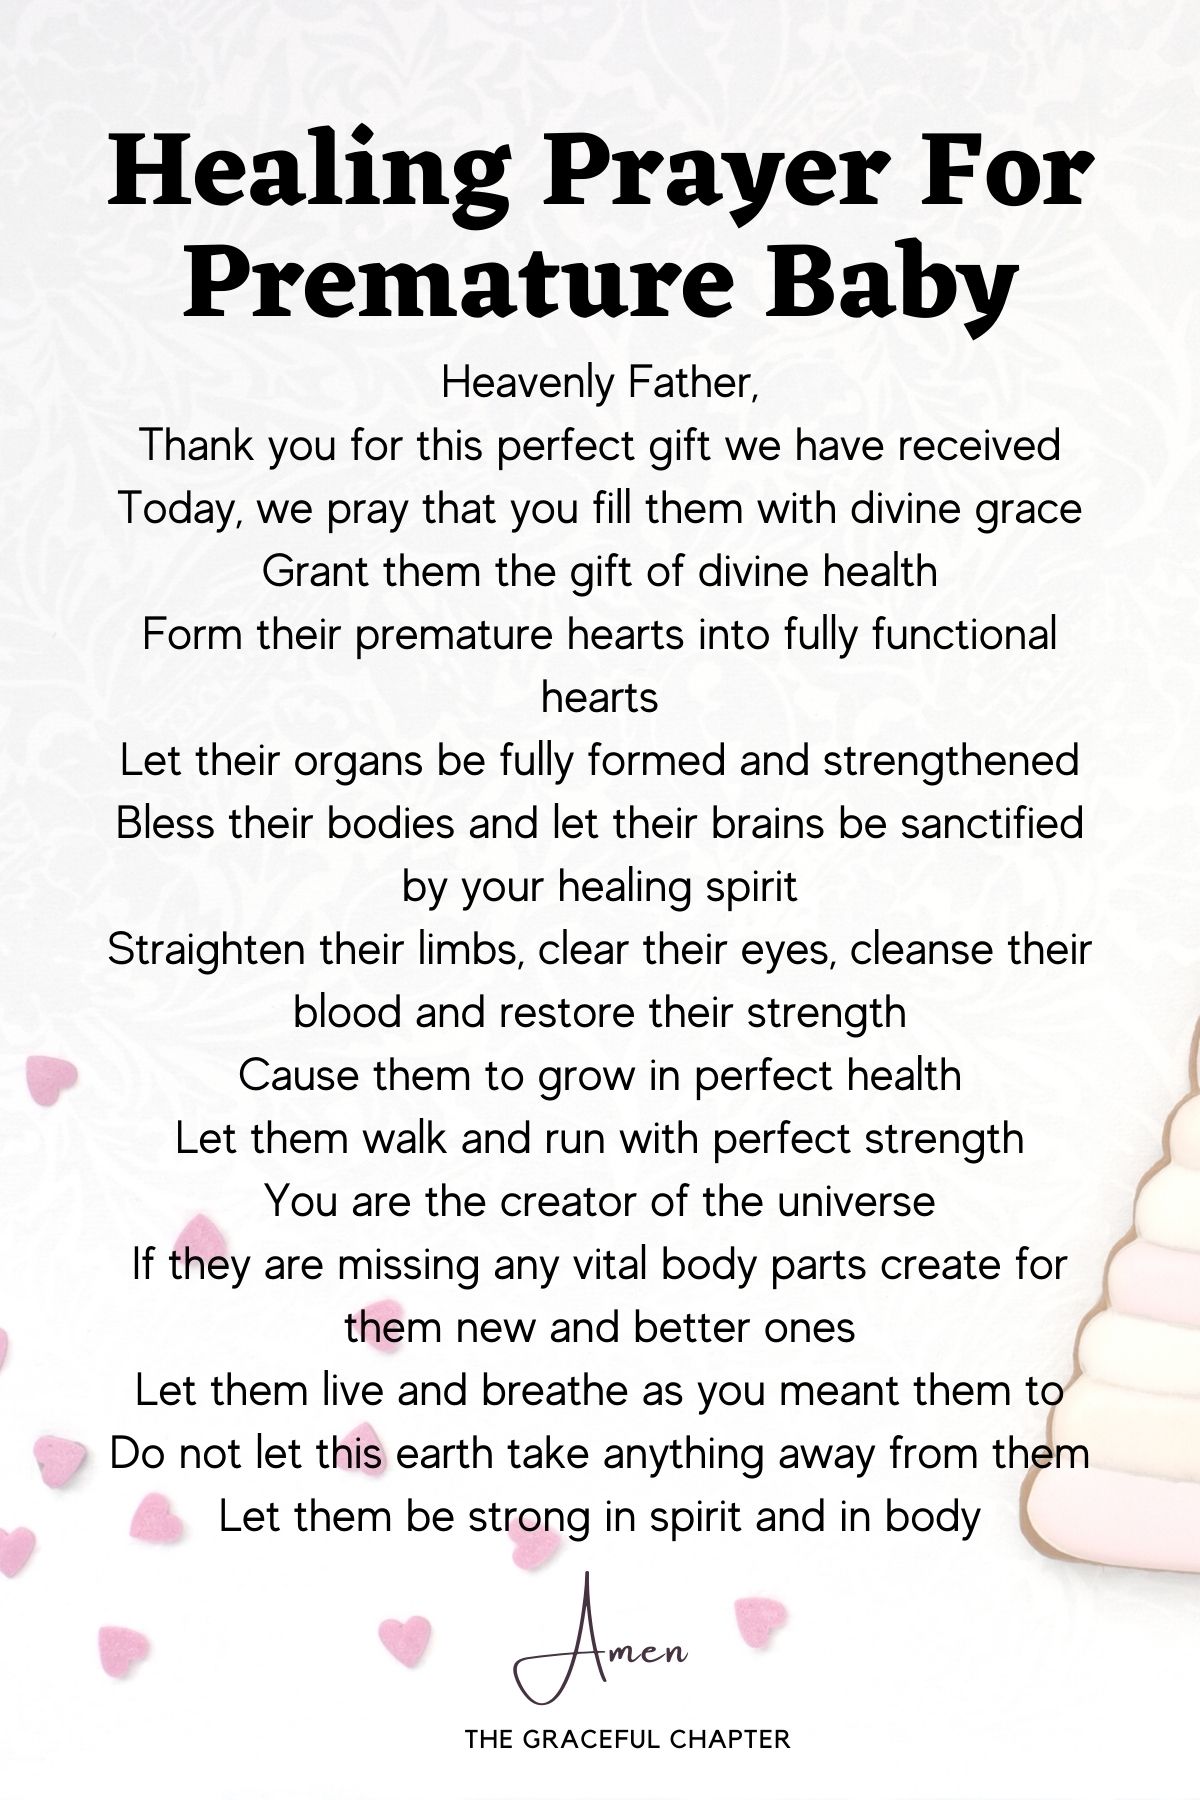 Healing prayer for premature baby